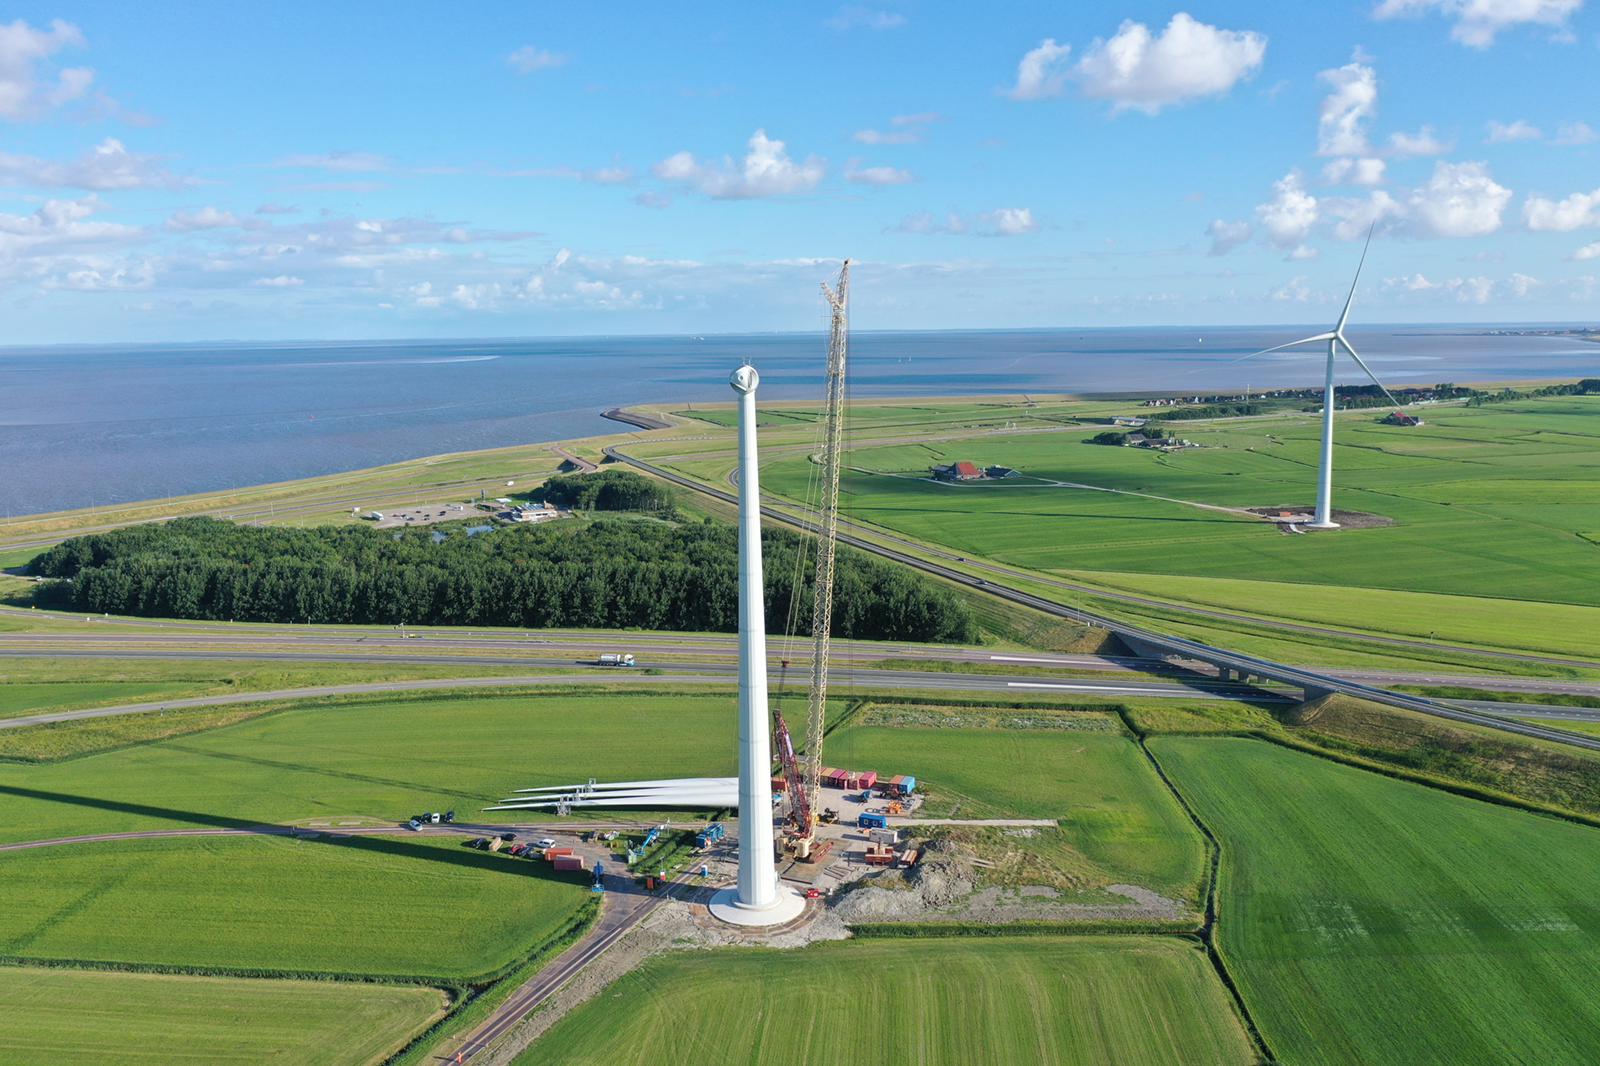 Wind farm Nij Hiddum-Houw